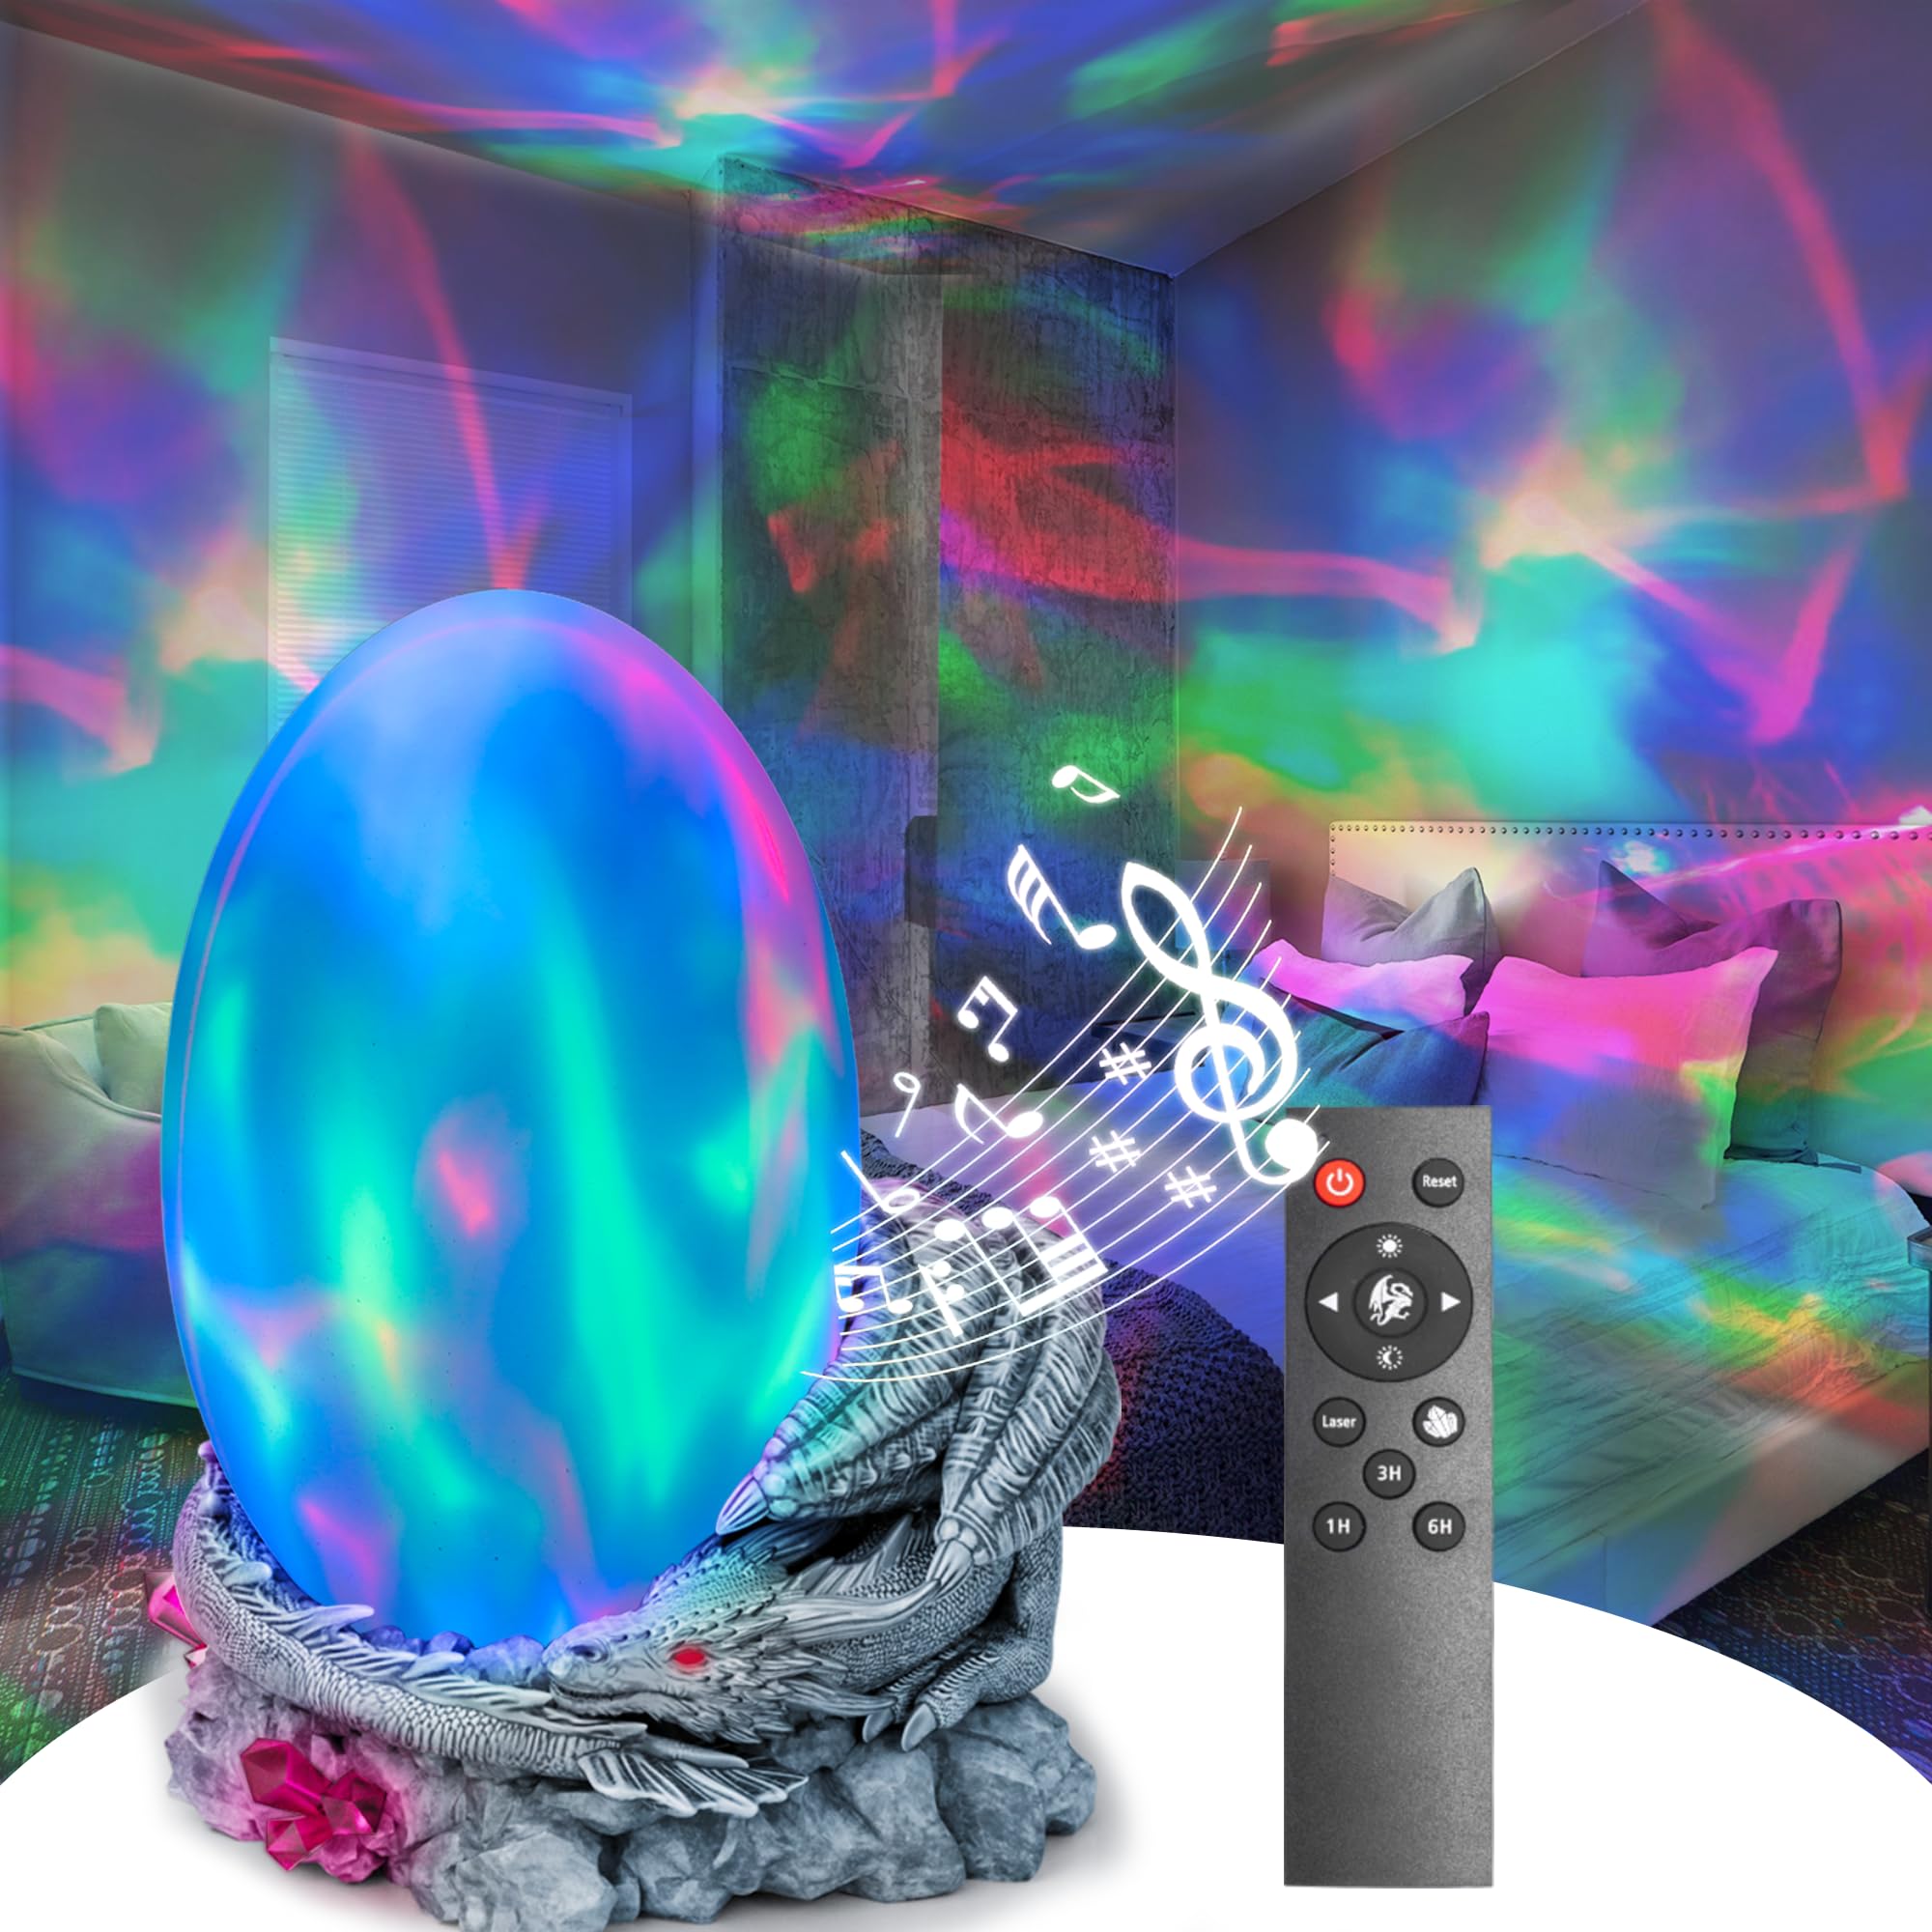 YOYEE Dragon Egg Lamp, Nebula Night Light, Nice Christmas Gifts, Music Speaker and White Noise Machine. Mood Ambiance Lighting for Gaming Desk Decor. Aesthetic Dragon Decor